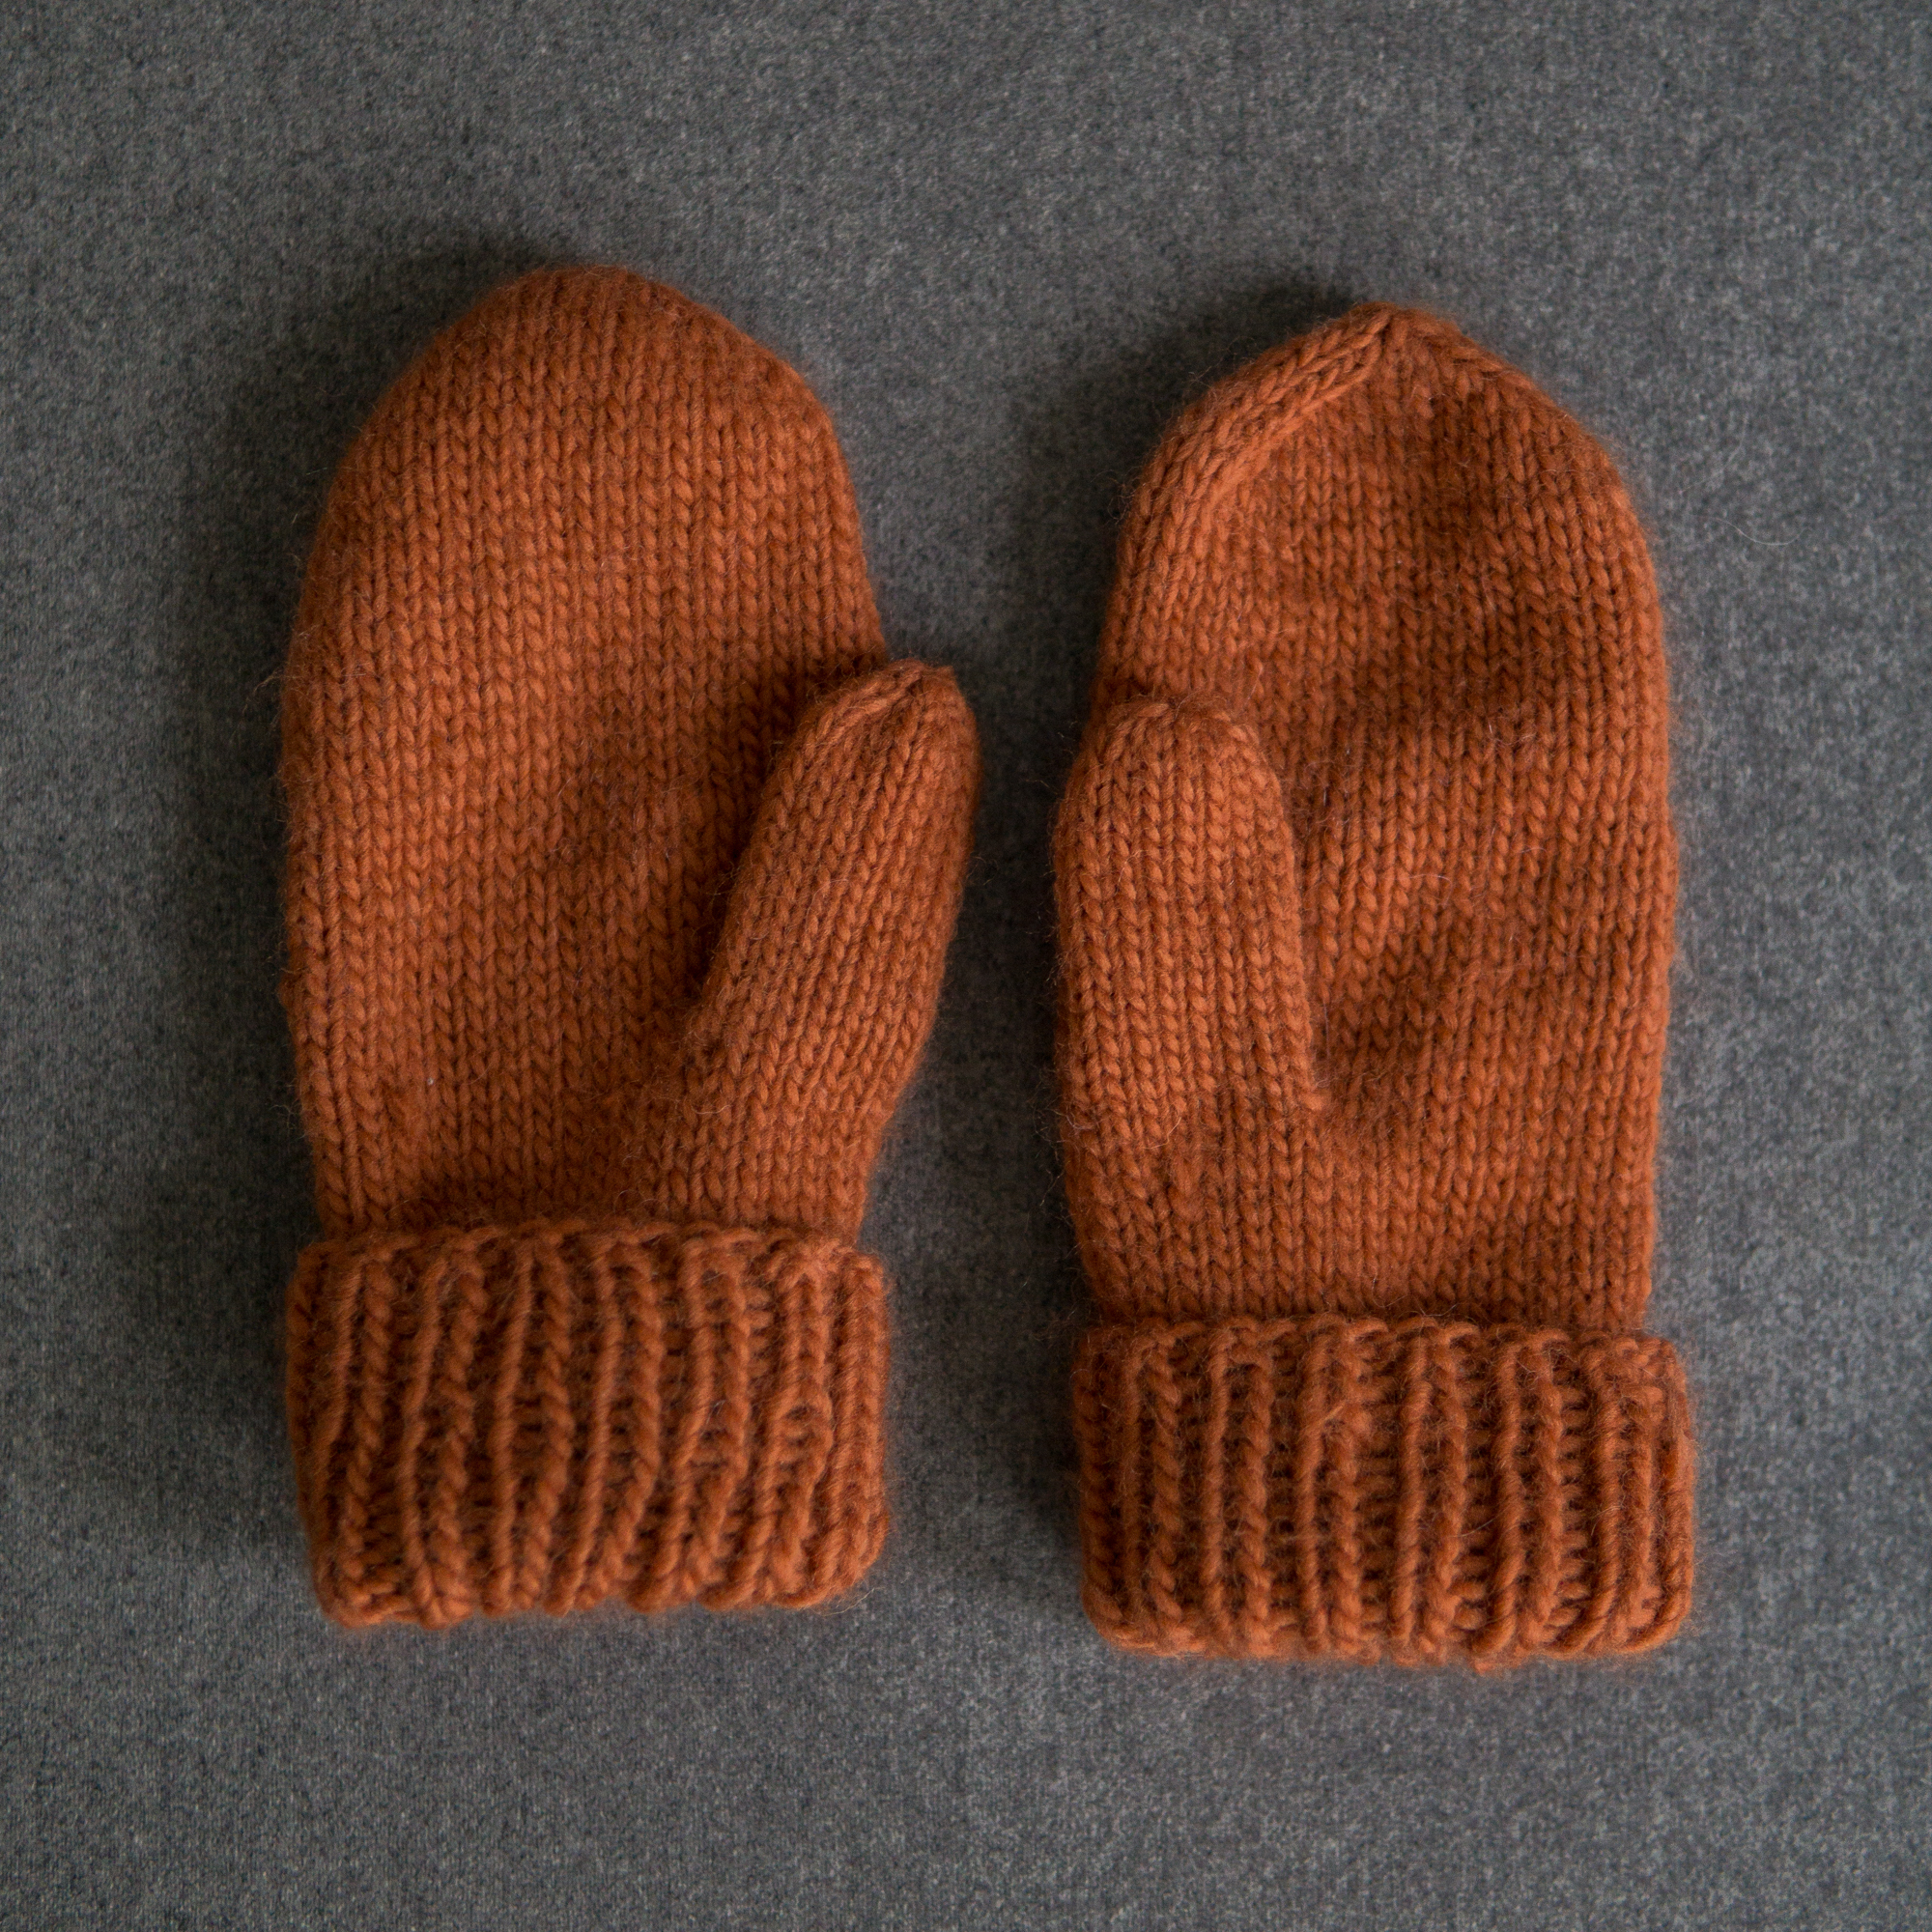 knitting pattern mittens - Stay warm mittens | Knitting kit mittens - by HipKnitShop - 23/10/2018